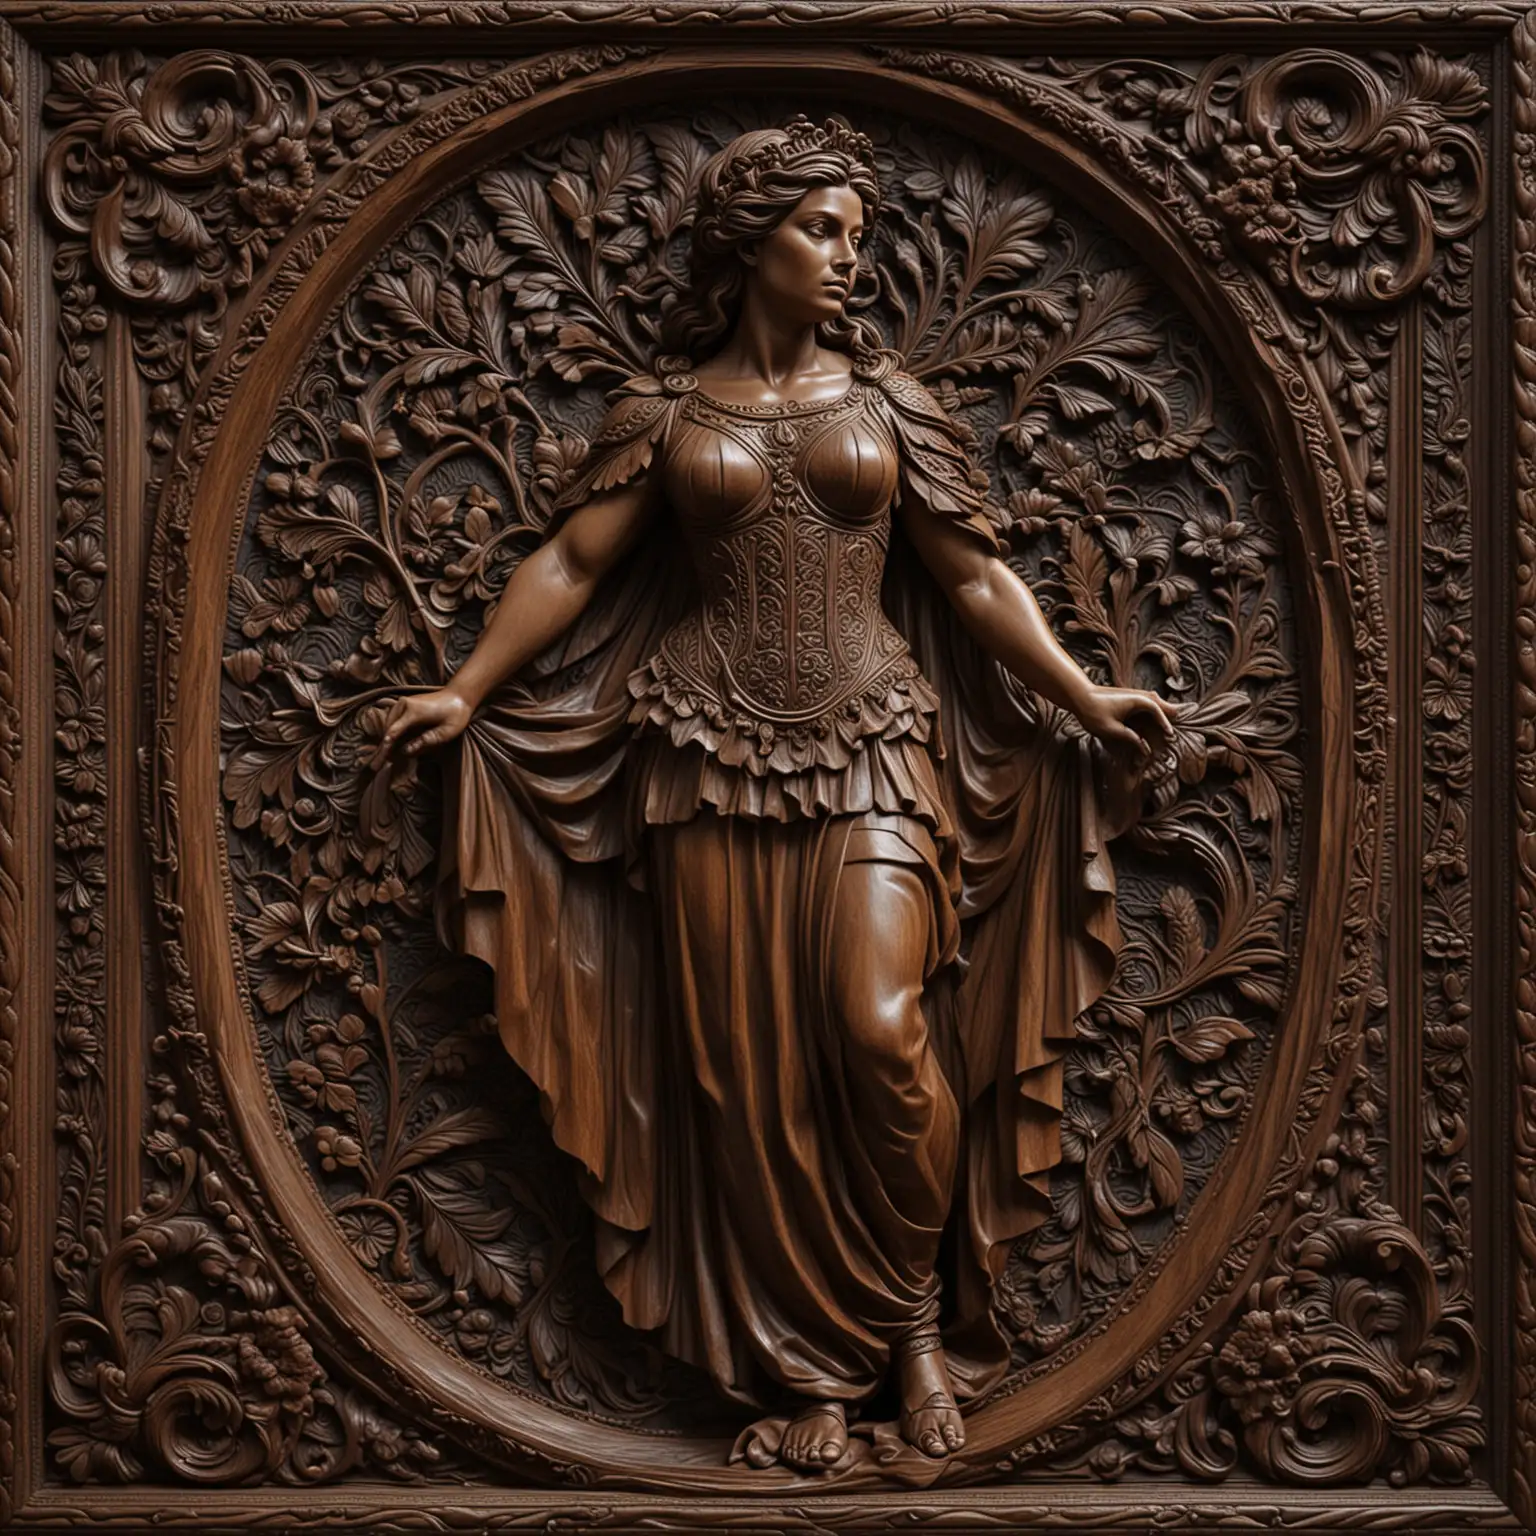 Rita-Webb-as-Roman-Woman-Exquisitely-Carved-Dark-Wood-Panel-Artwork